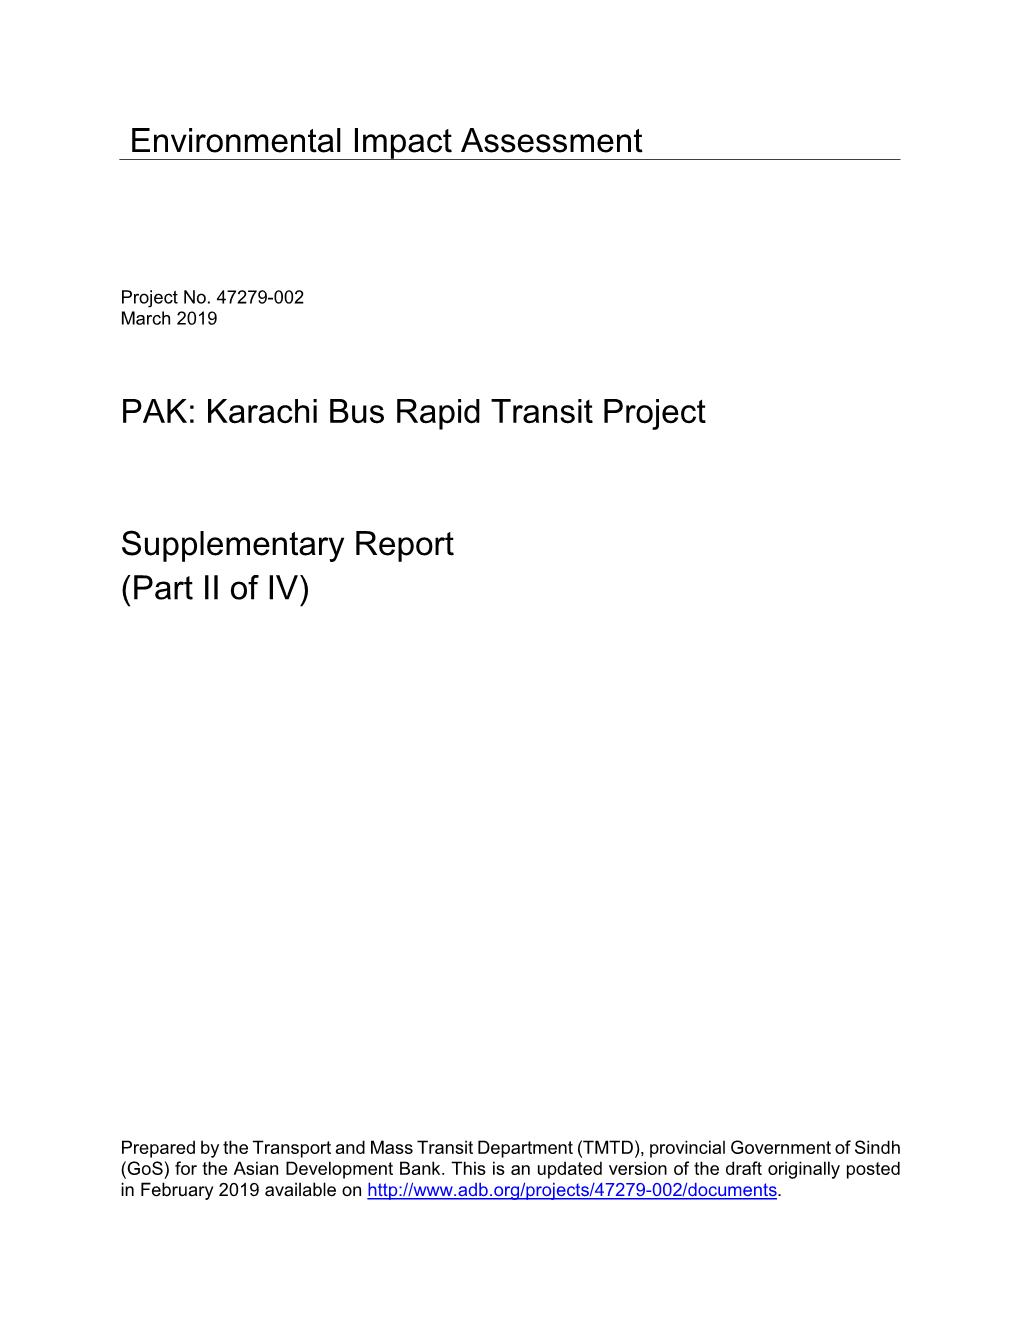 Karachi Bus Rapid Transit Project Supplementary Report (Part II Of